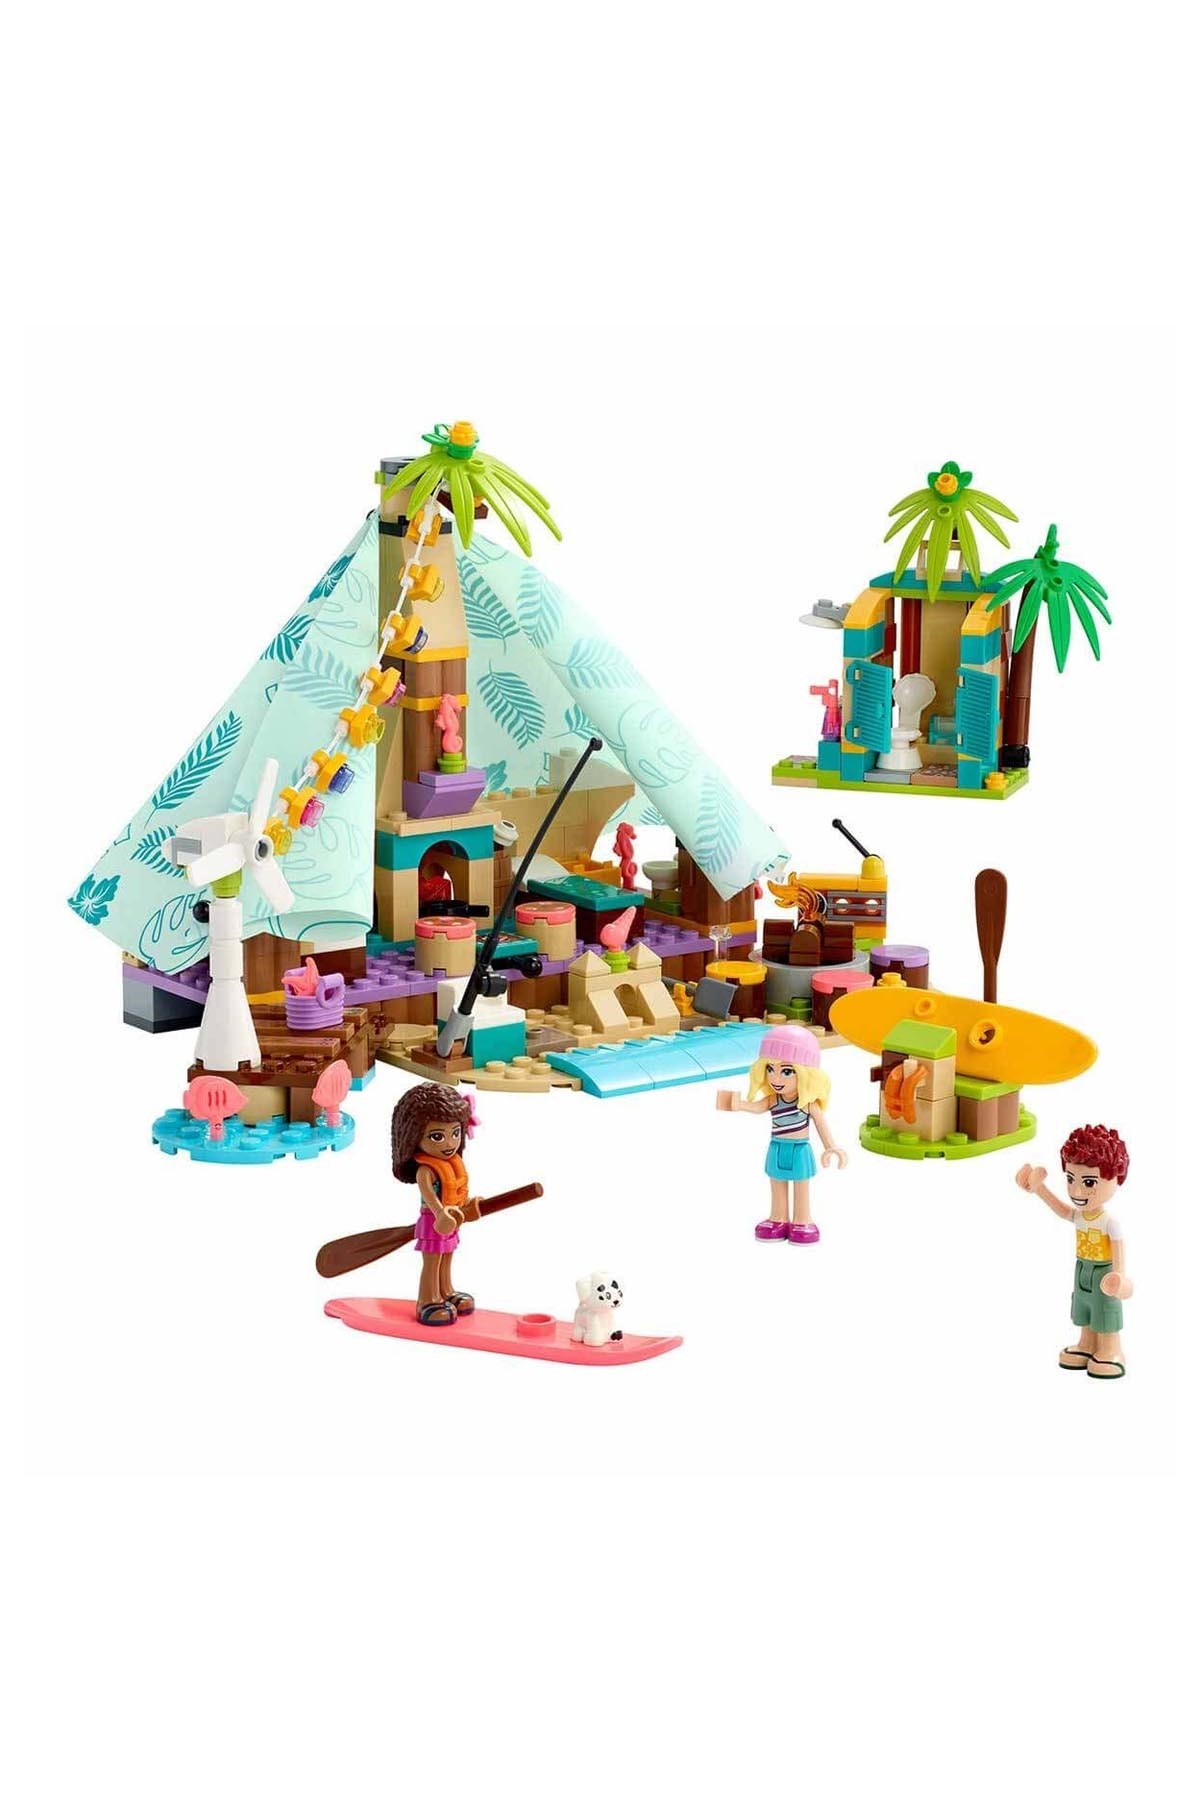 Lego Friends Lüks Plaj Çadırı